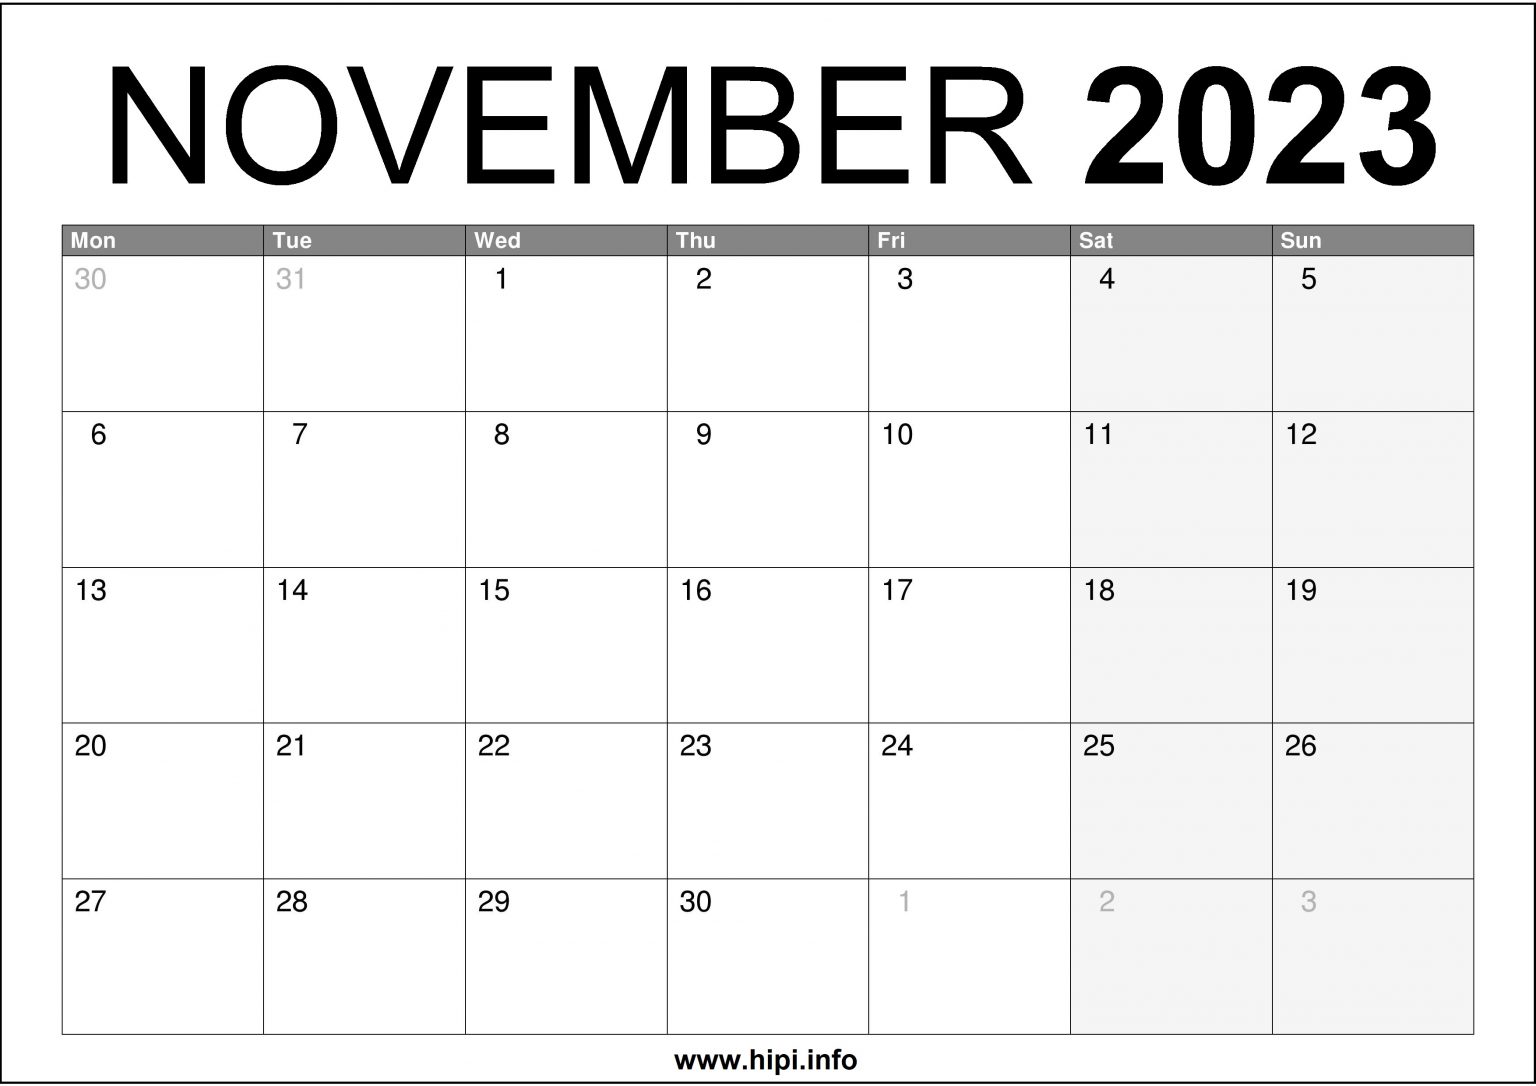 november-2023-uk-calendar-printable-hipi-info